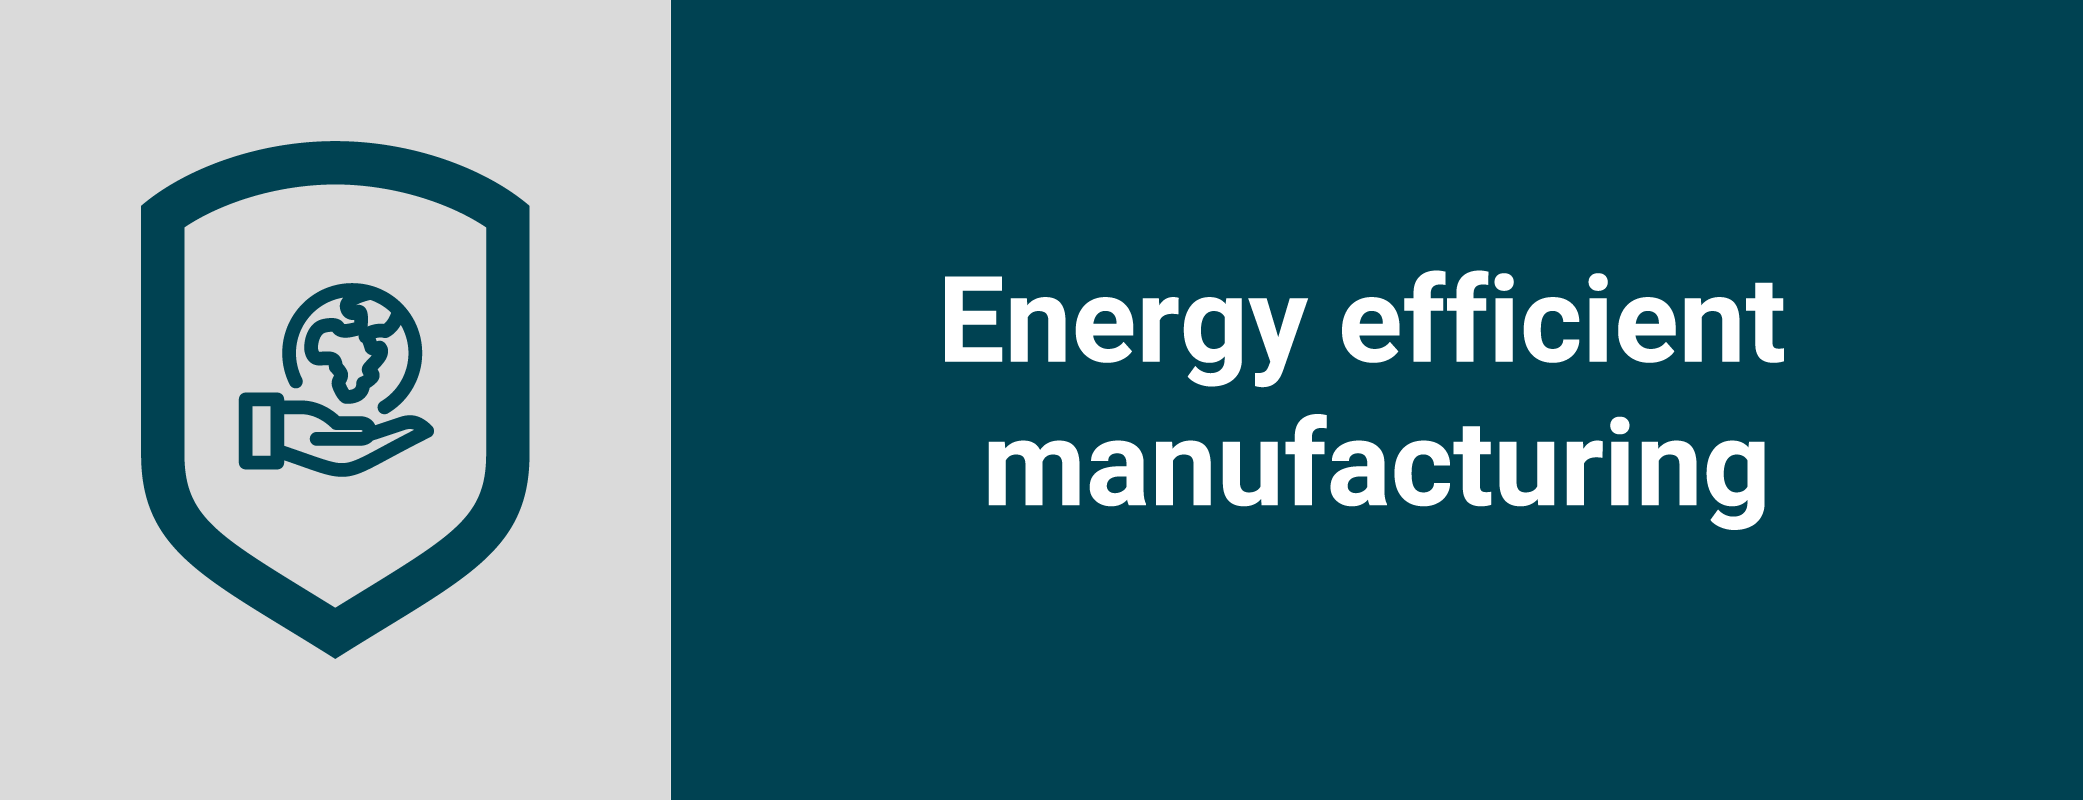 energy efficient manufacturing